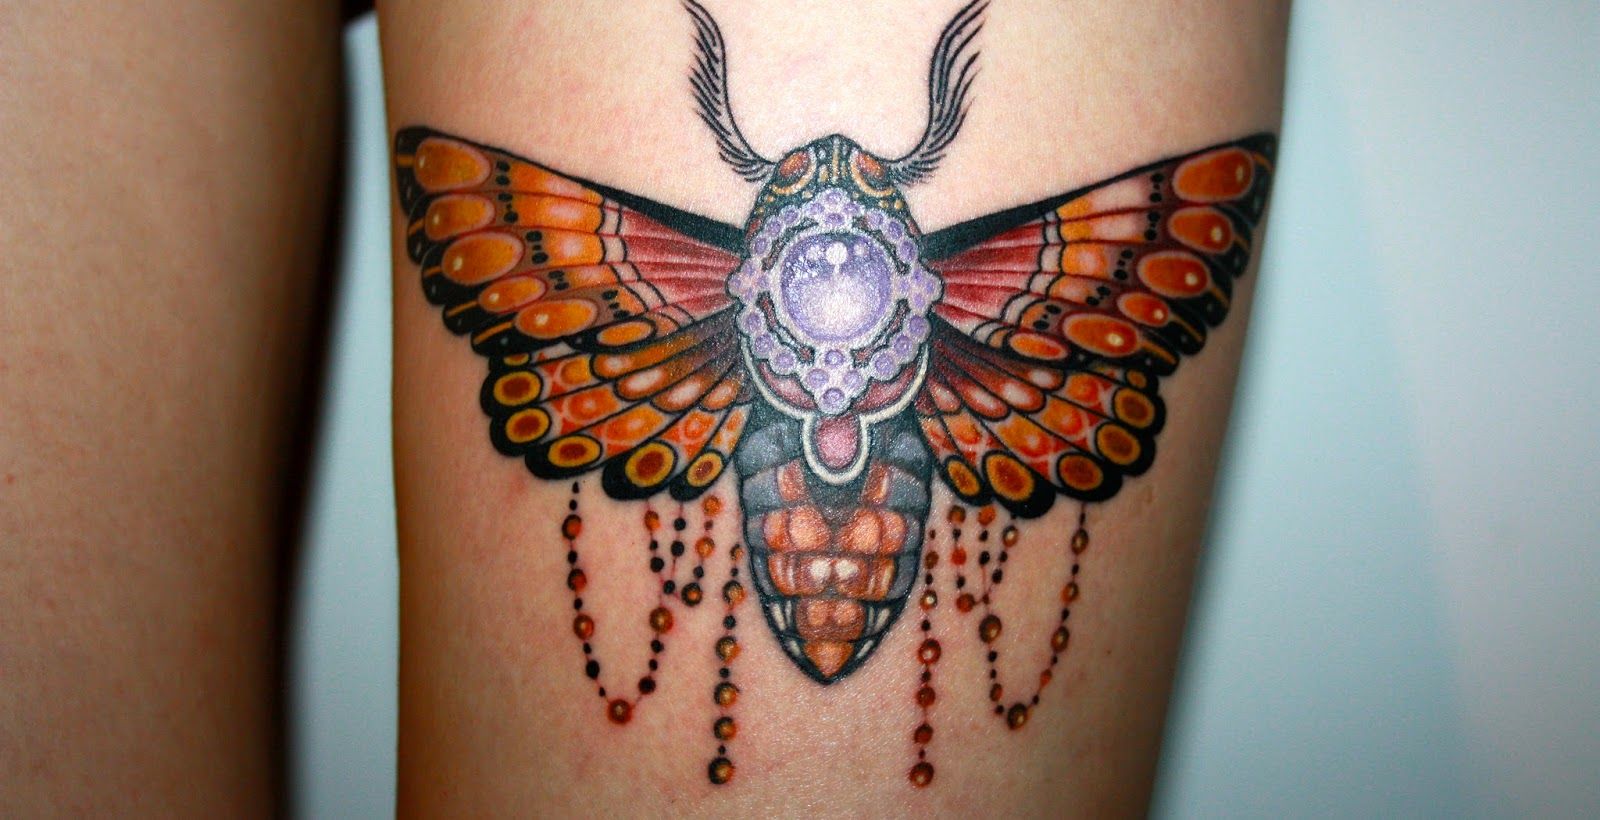 Moth tattoo - Tattoo Designs for Women